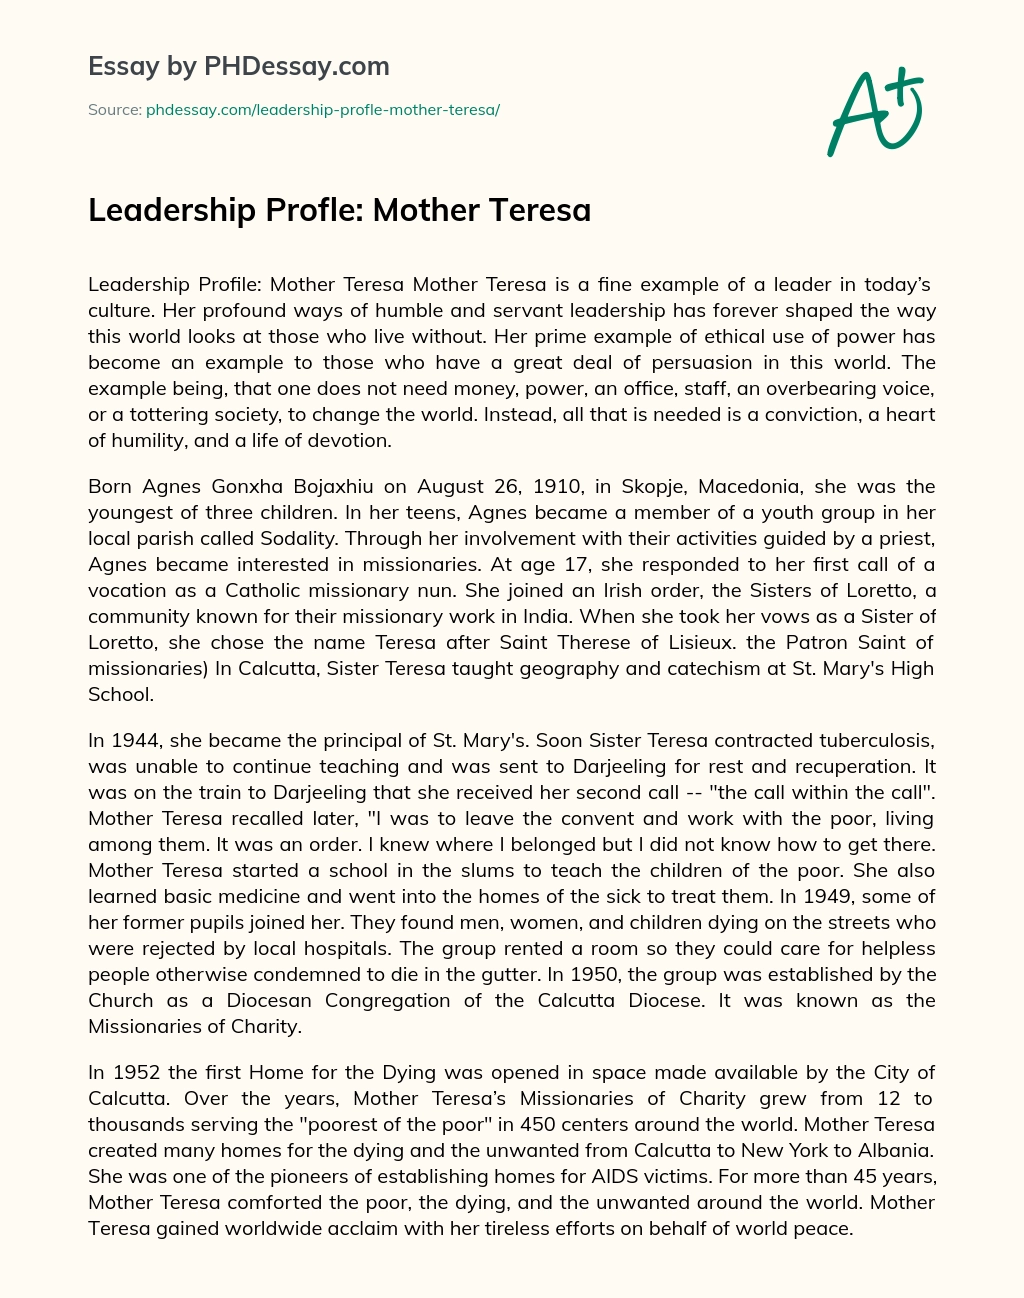 Leadership Profle: Mother Teresa essay